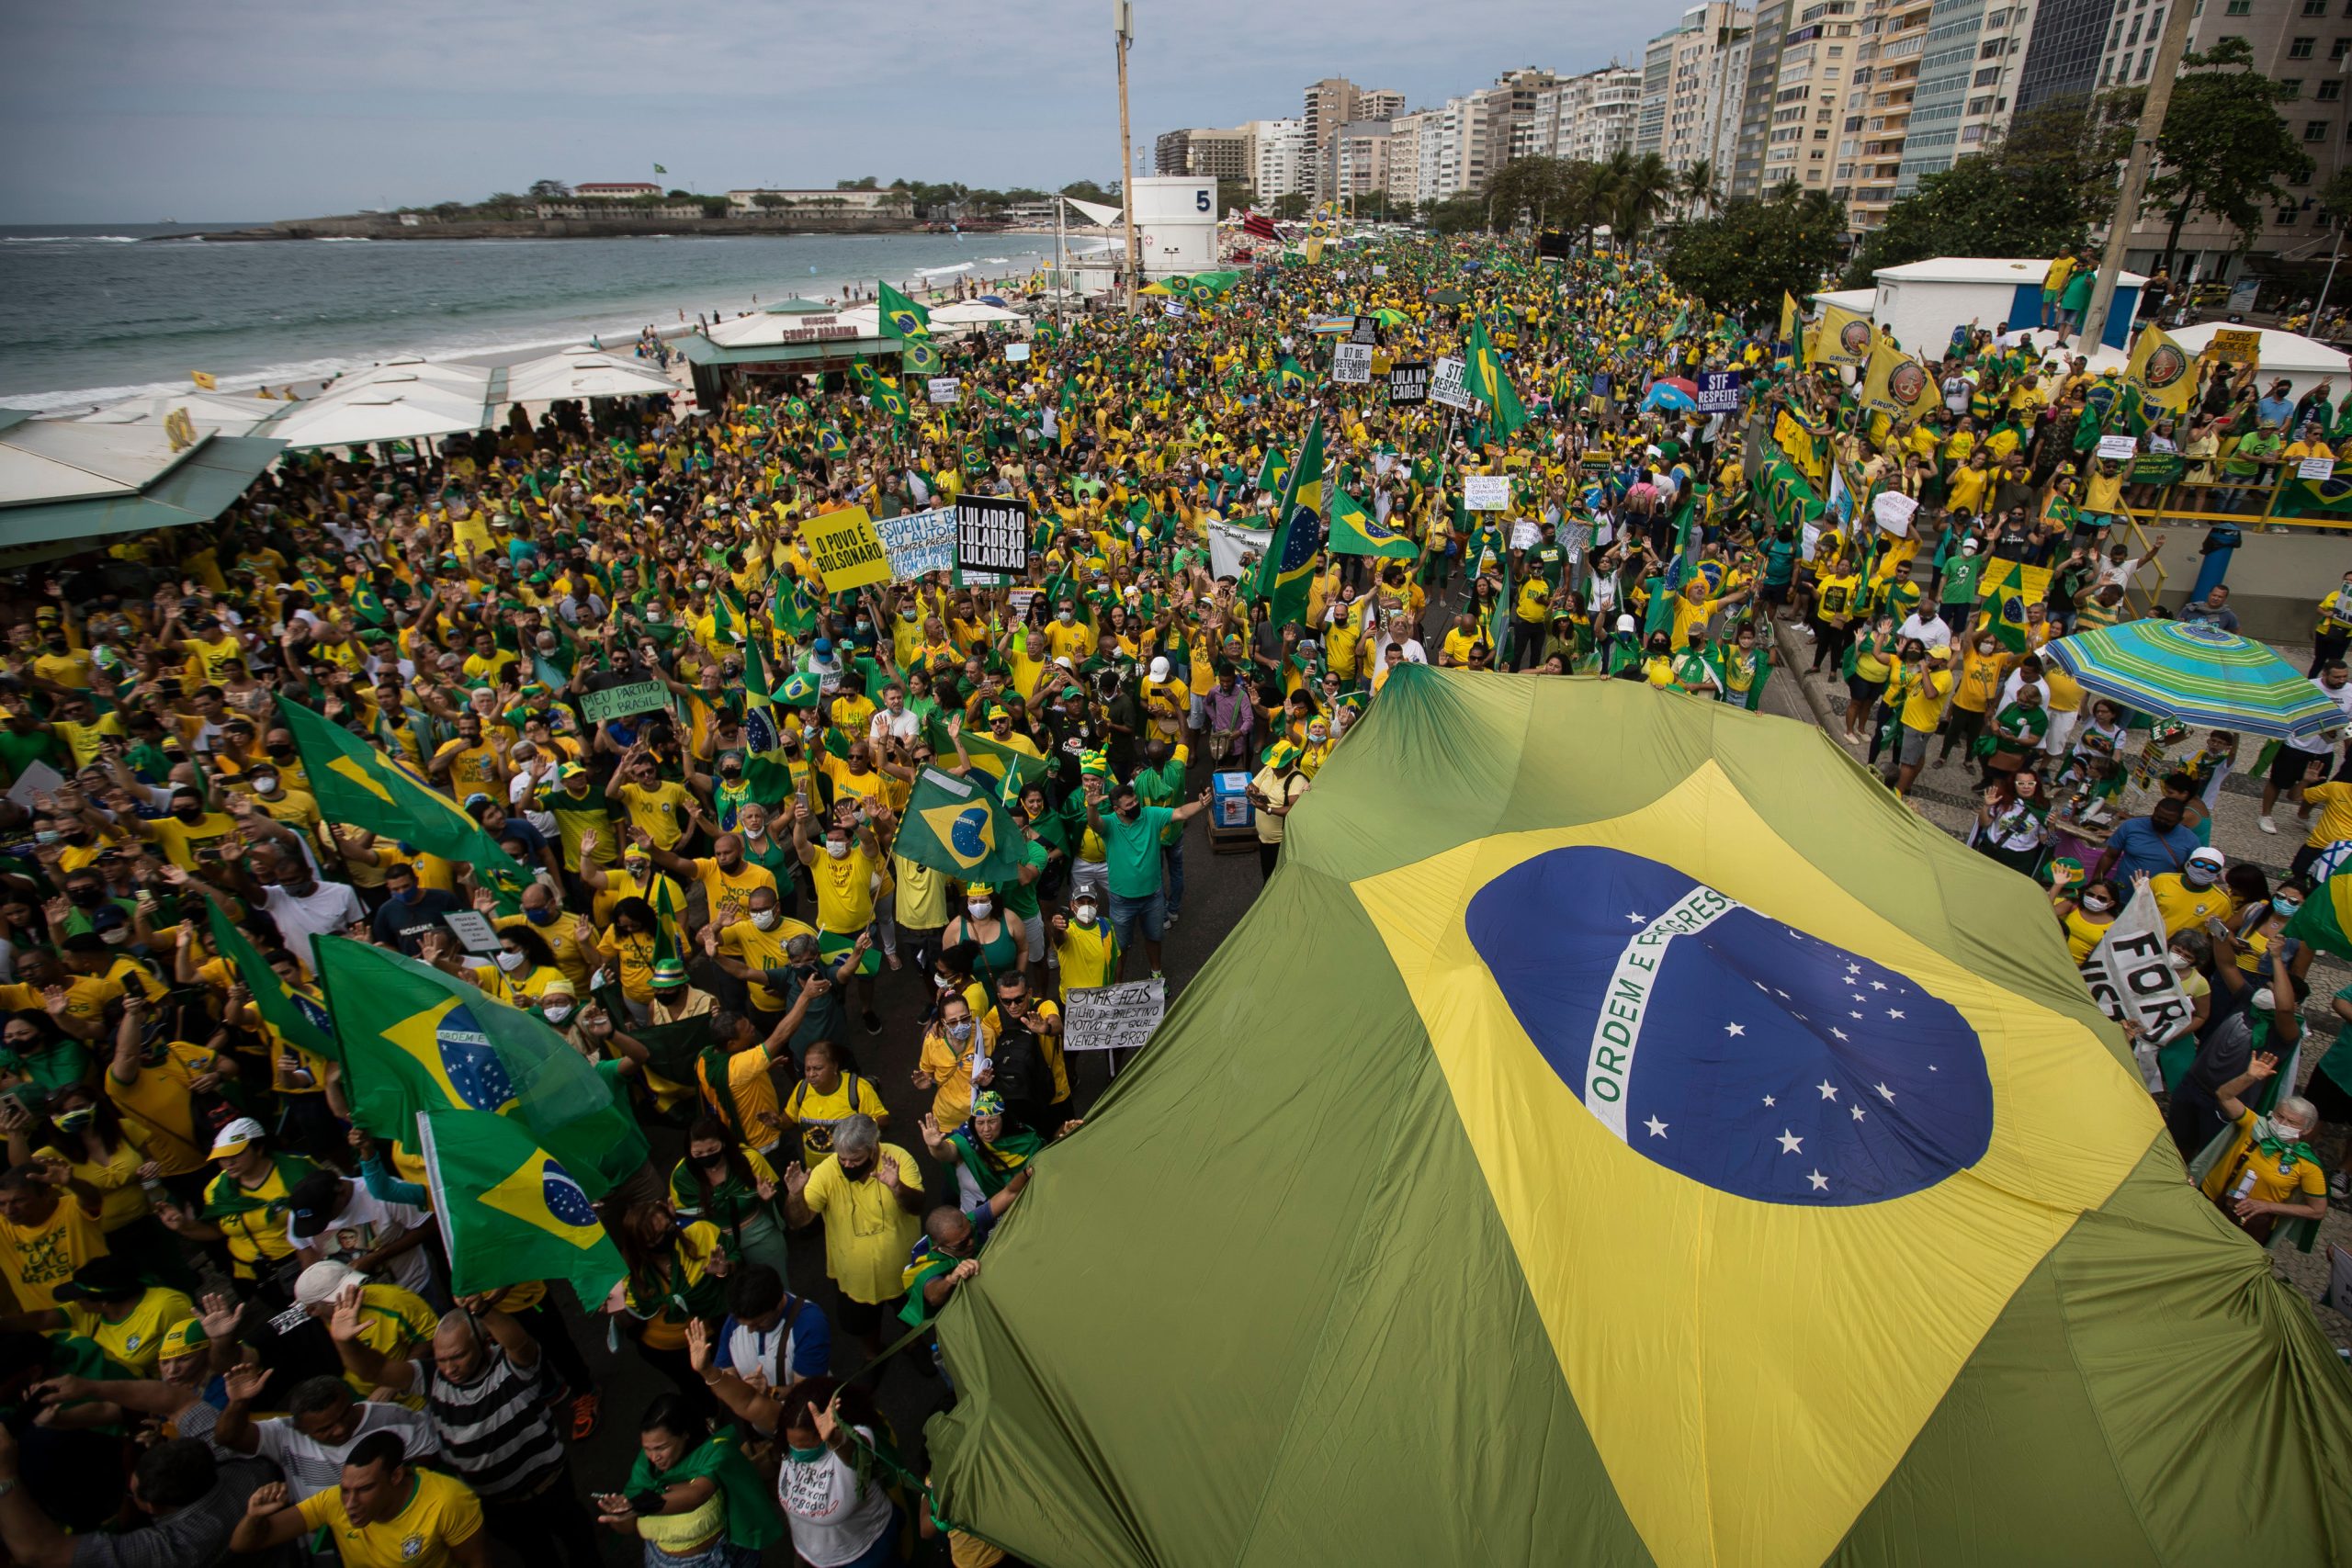 Jair Bolsonaro’s supporters rally in Brazil to reboot his presidency